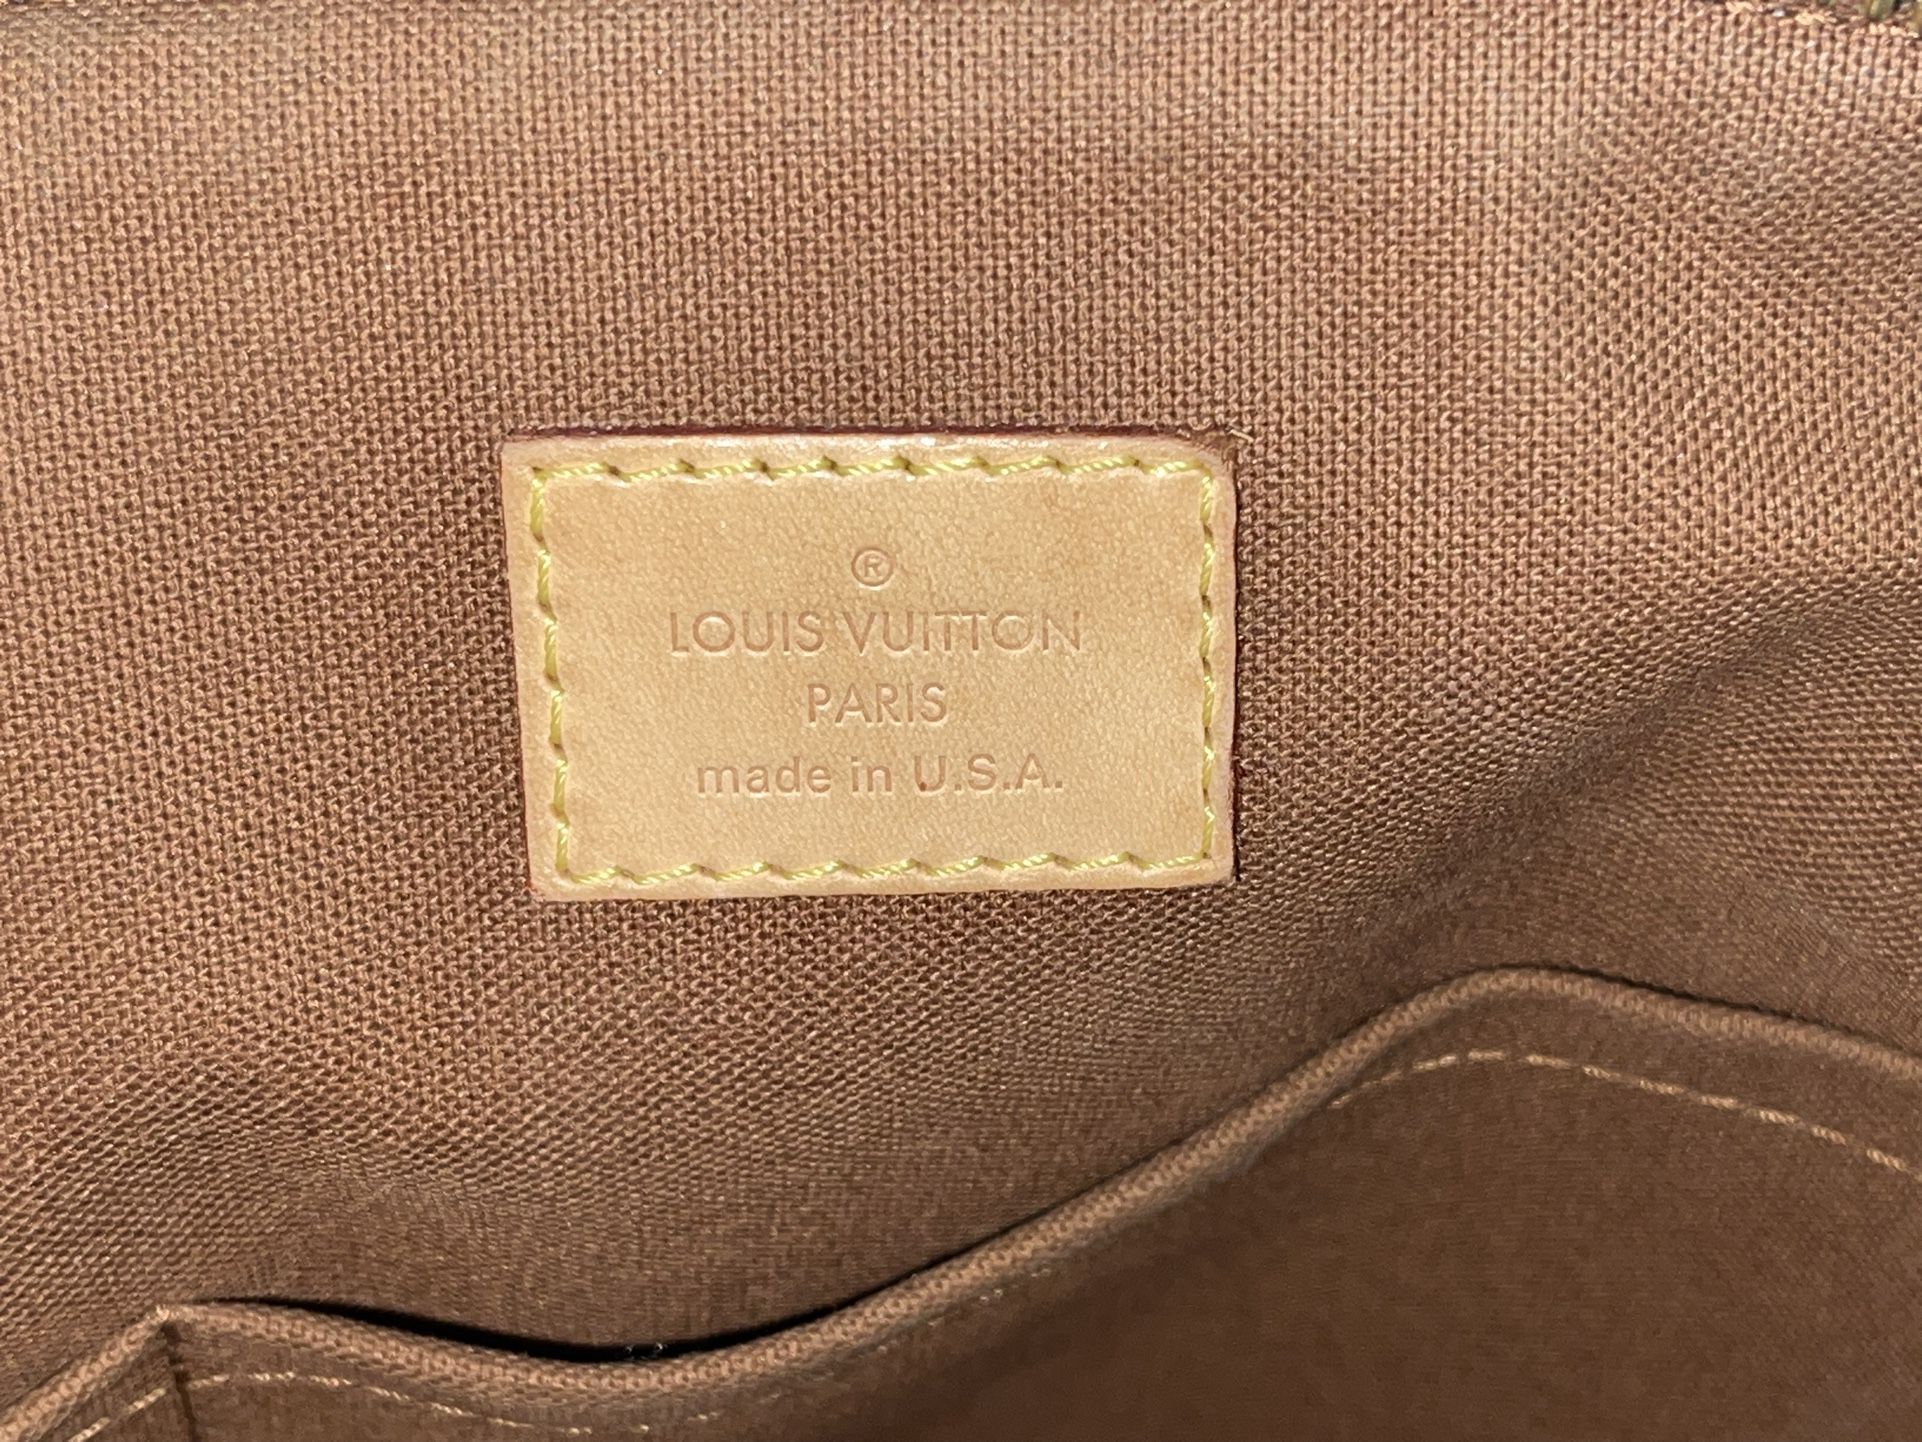 2,000 OboLouis Vuitton LV Trivoli GM Hand Bag M40144 Monogram Brown for  Sale in Albuquerque, NM - OfferUp